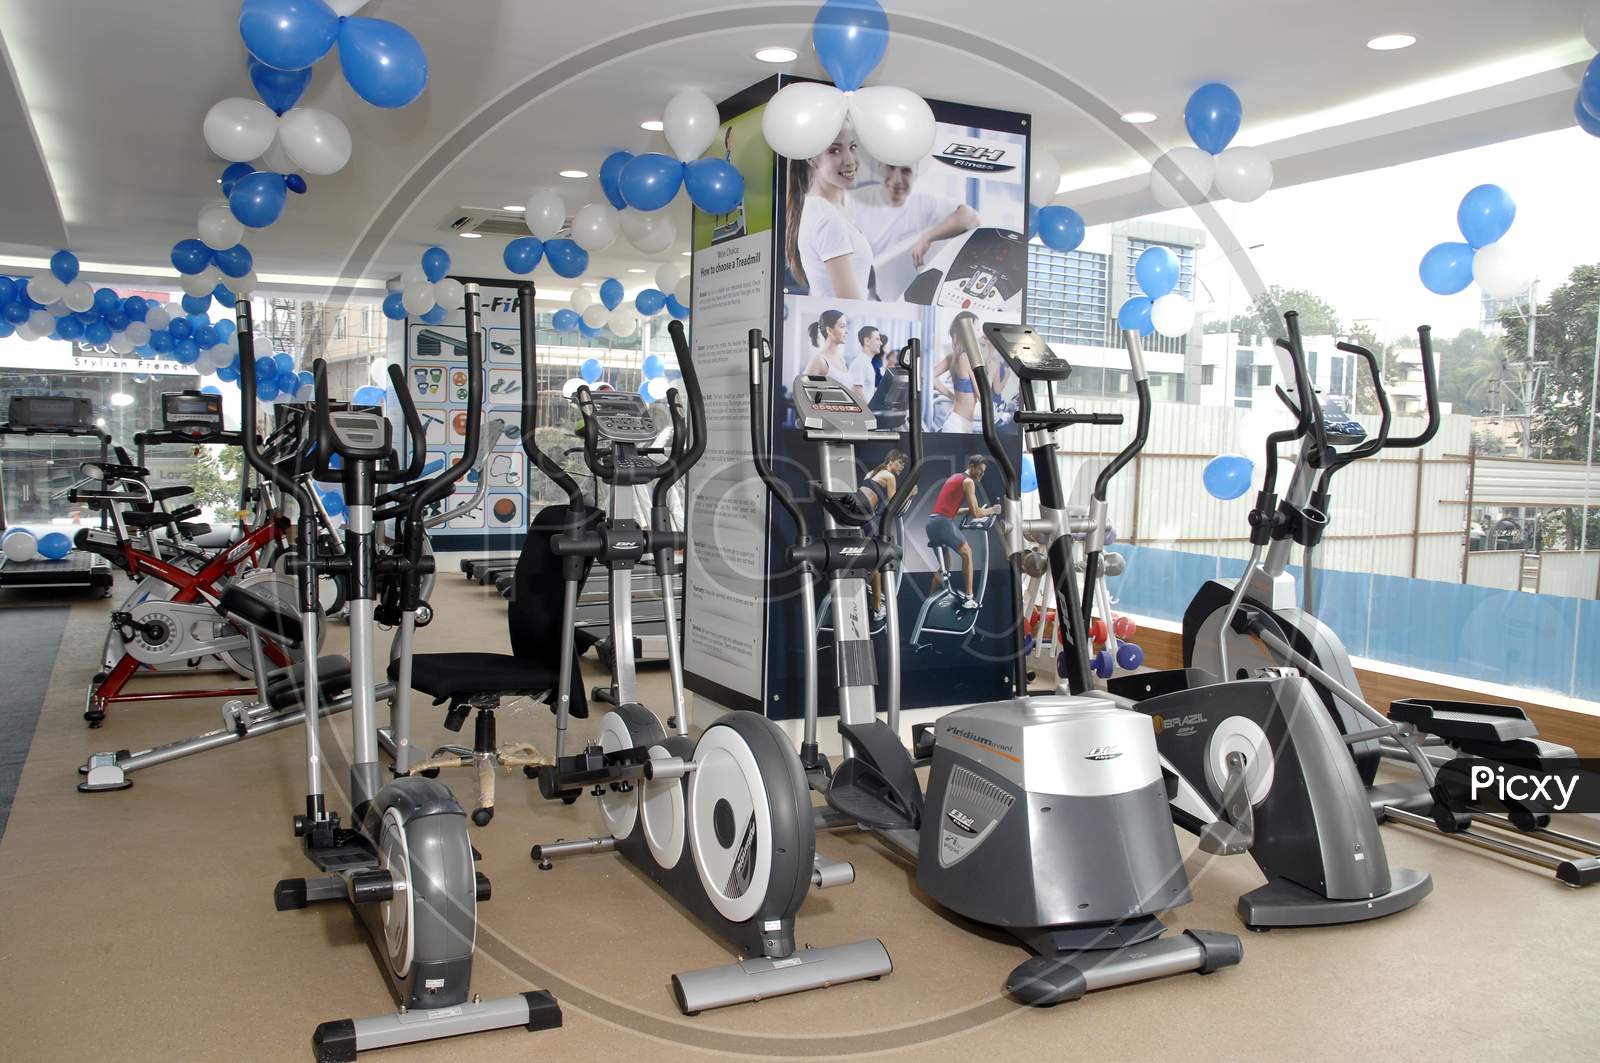 Elliptical bicycle machines in a gym